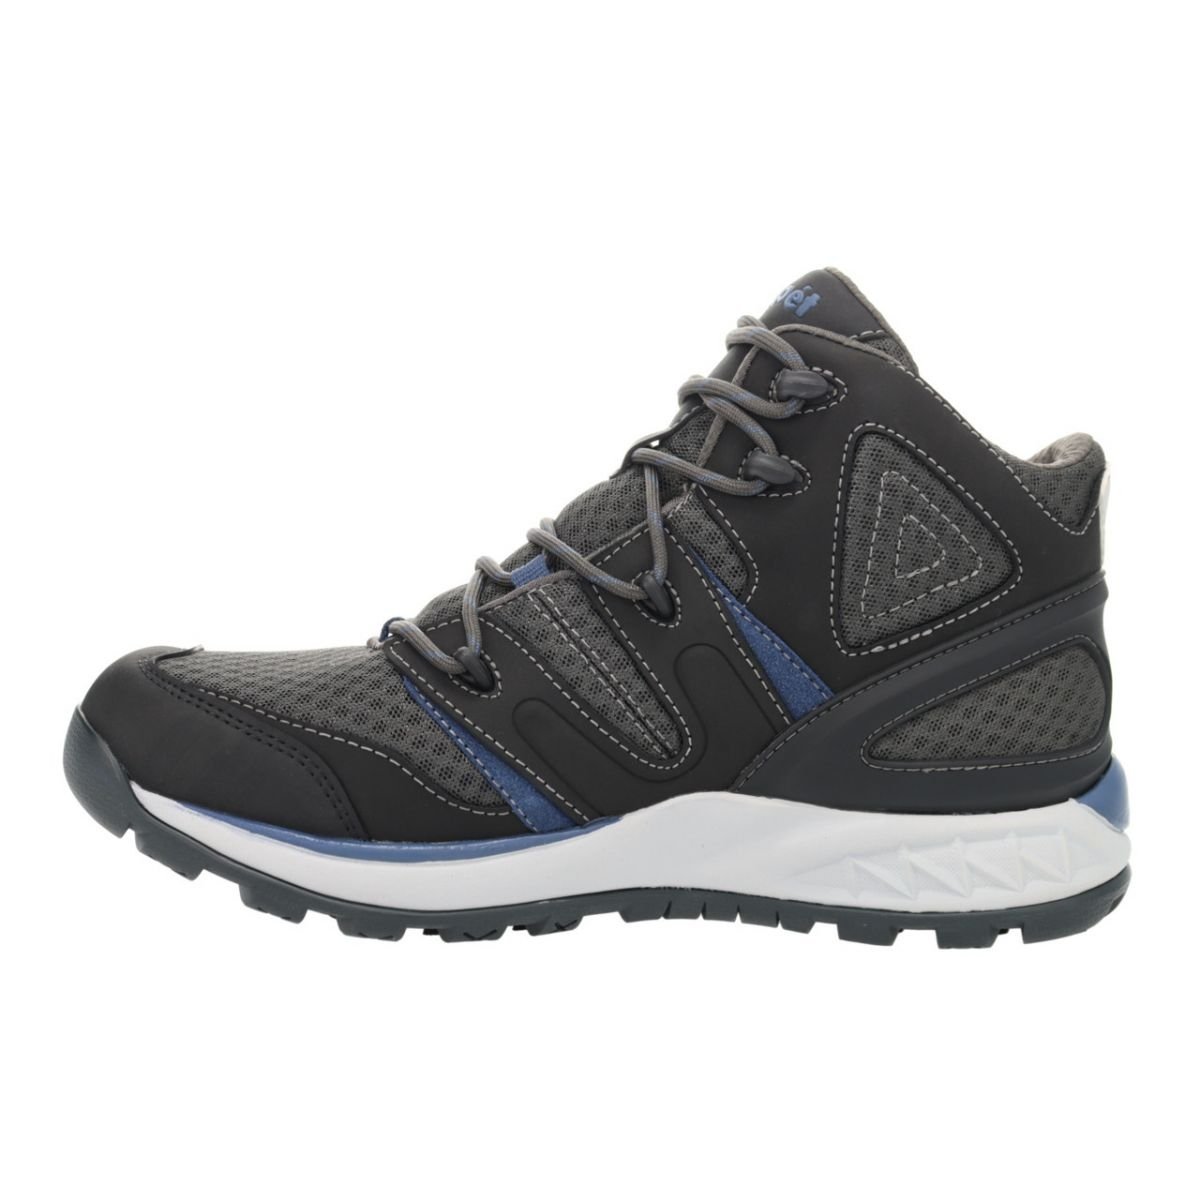 Propet Men's Veymont Waterproof Hiking Boot Grey/Blue - MOA022SGRB GREY/BLUE - GREY/BLUE, 9.5 X-Wide